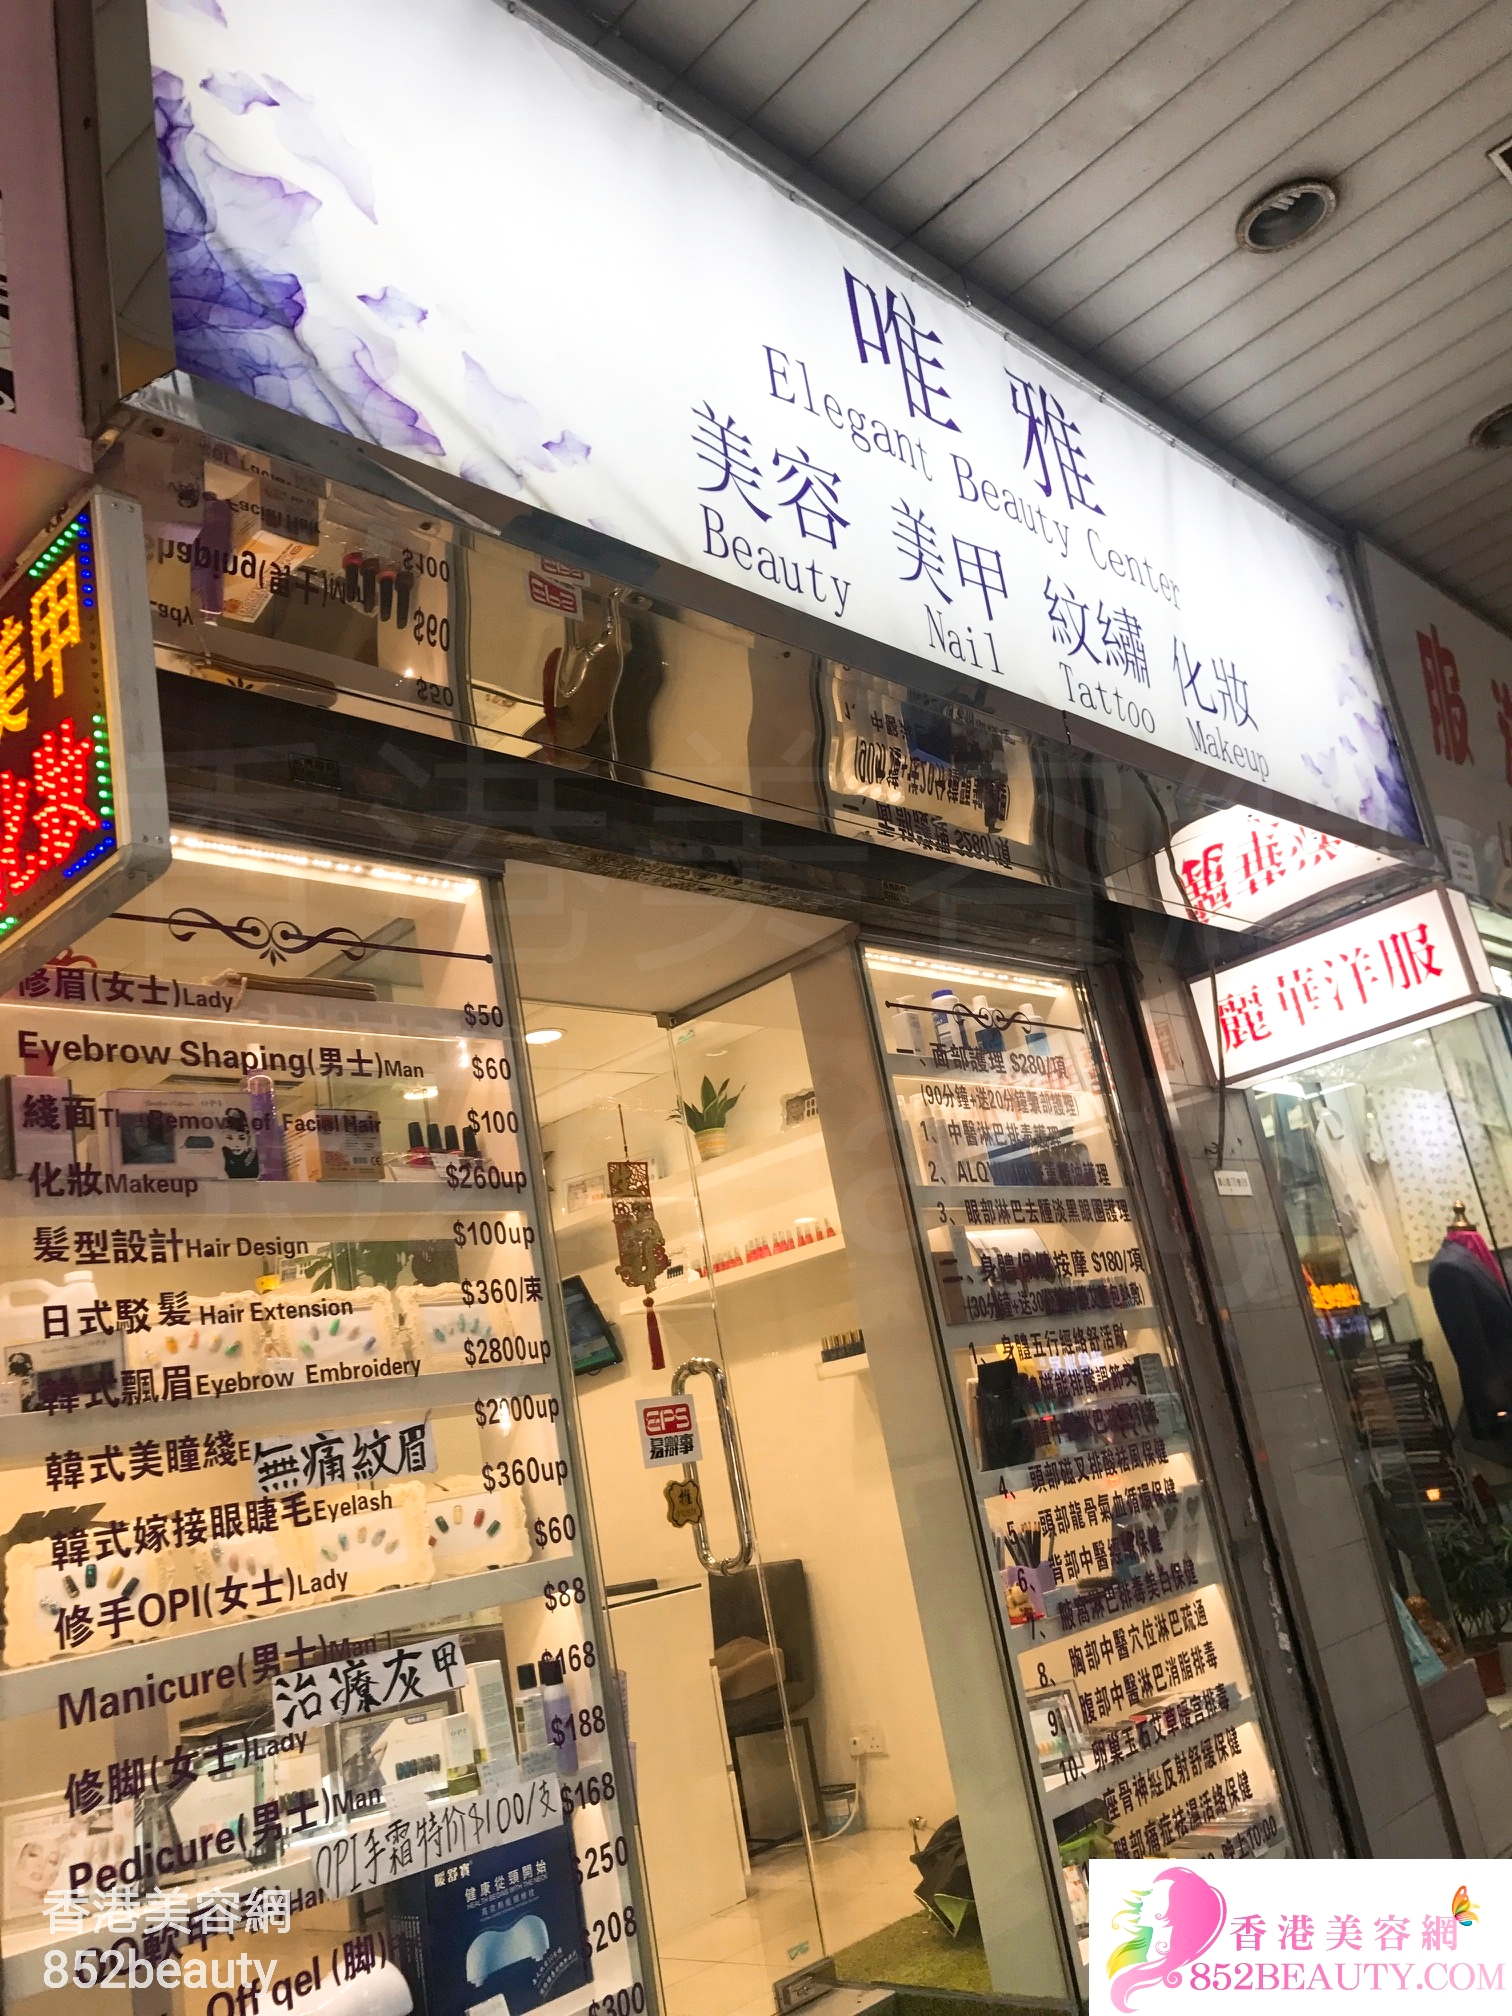 Manicure: 唯雅 Elegant Beauty Center